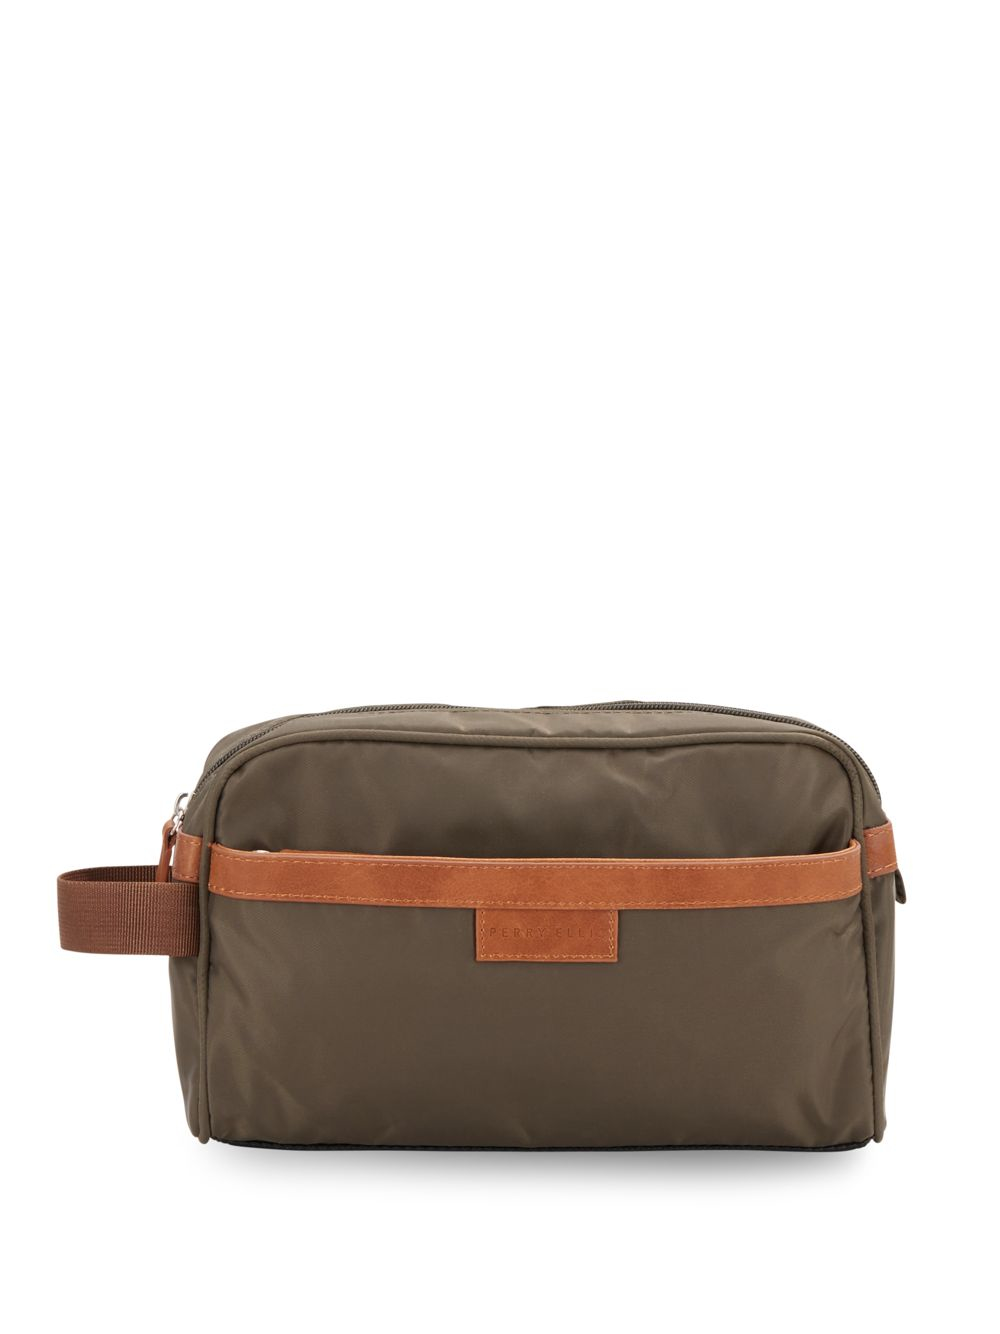 Lyst - Perry Ellis Nylon Travel Bag in Brown for Men